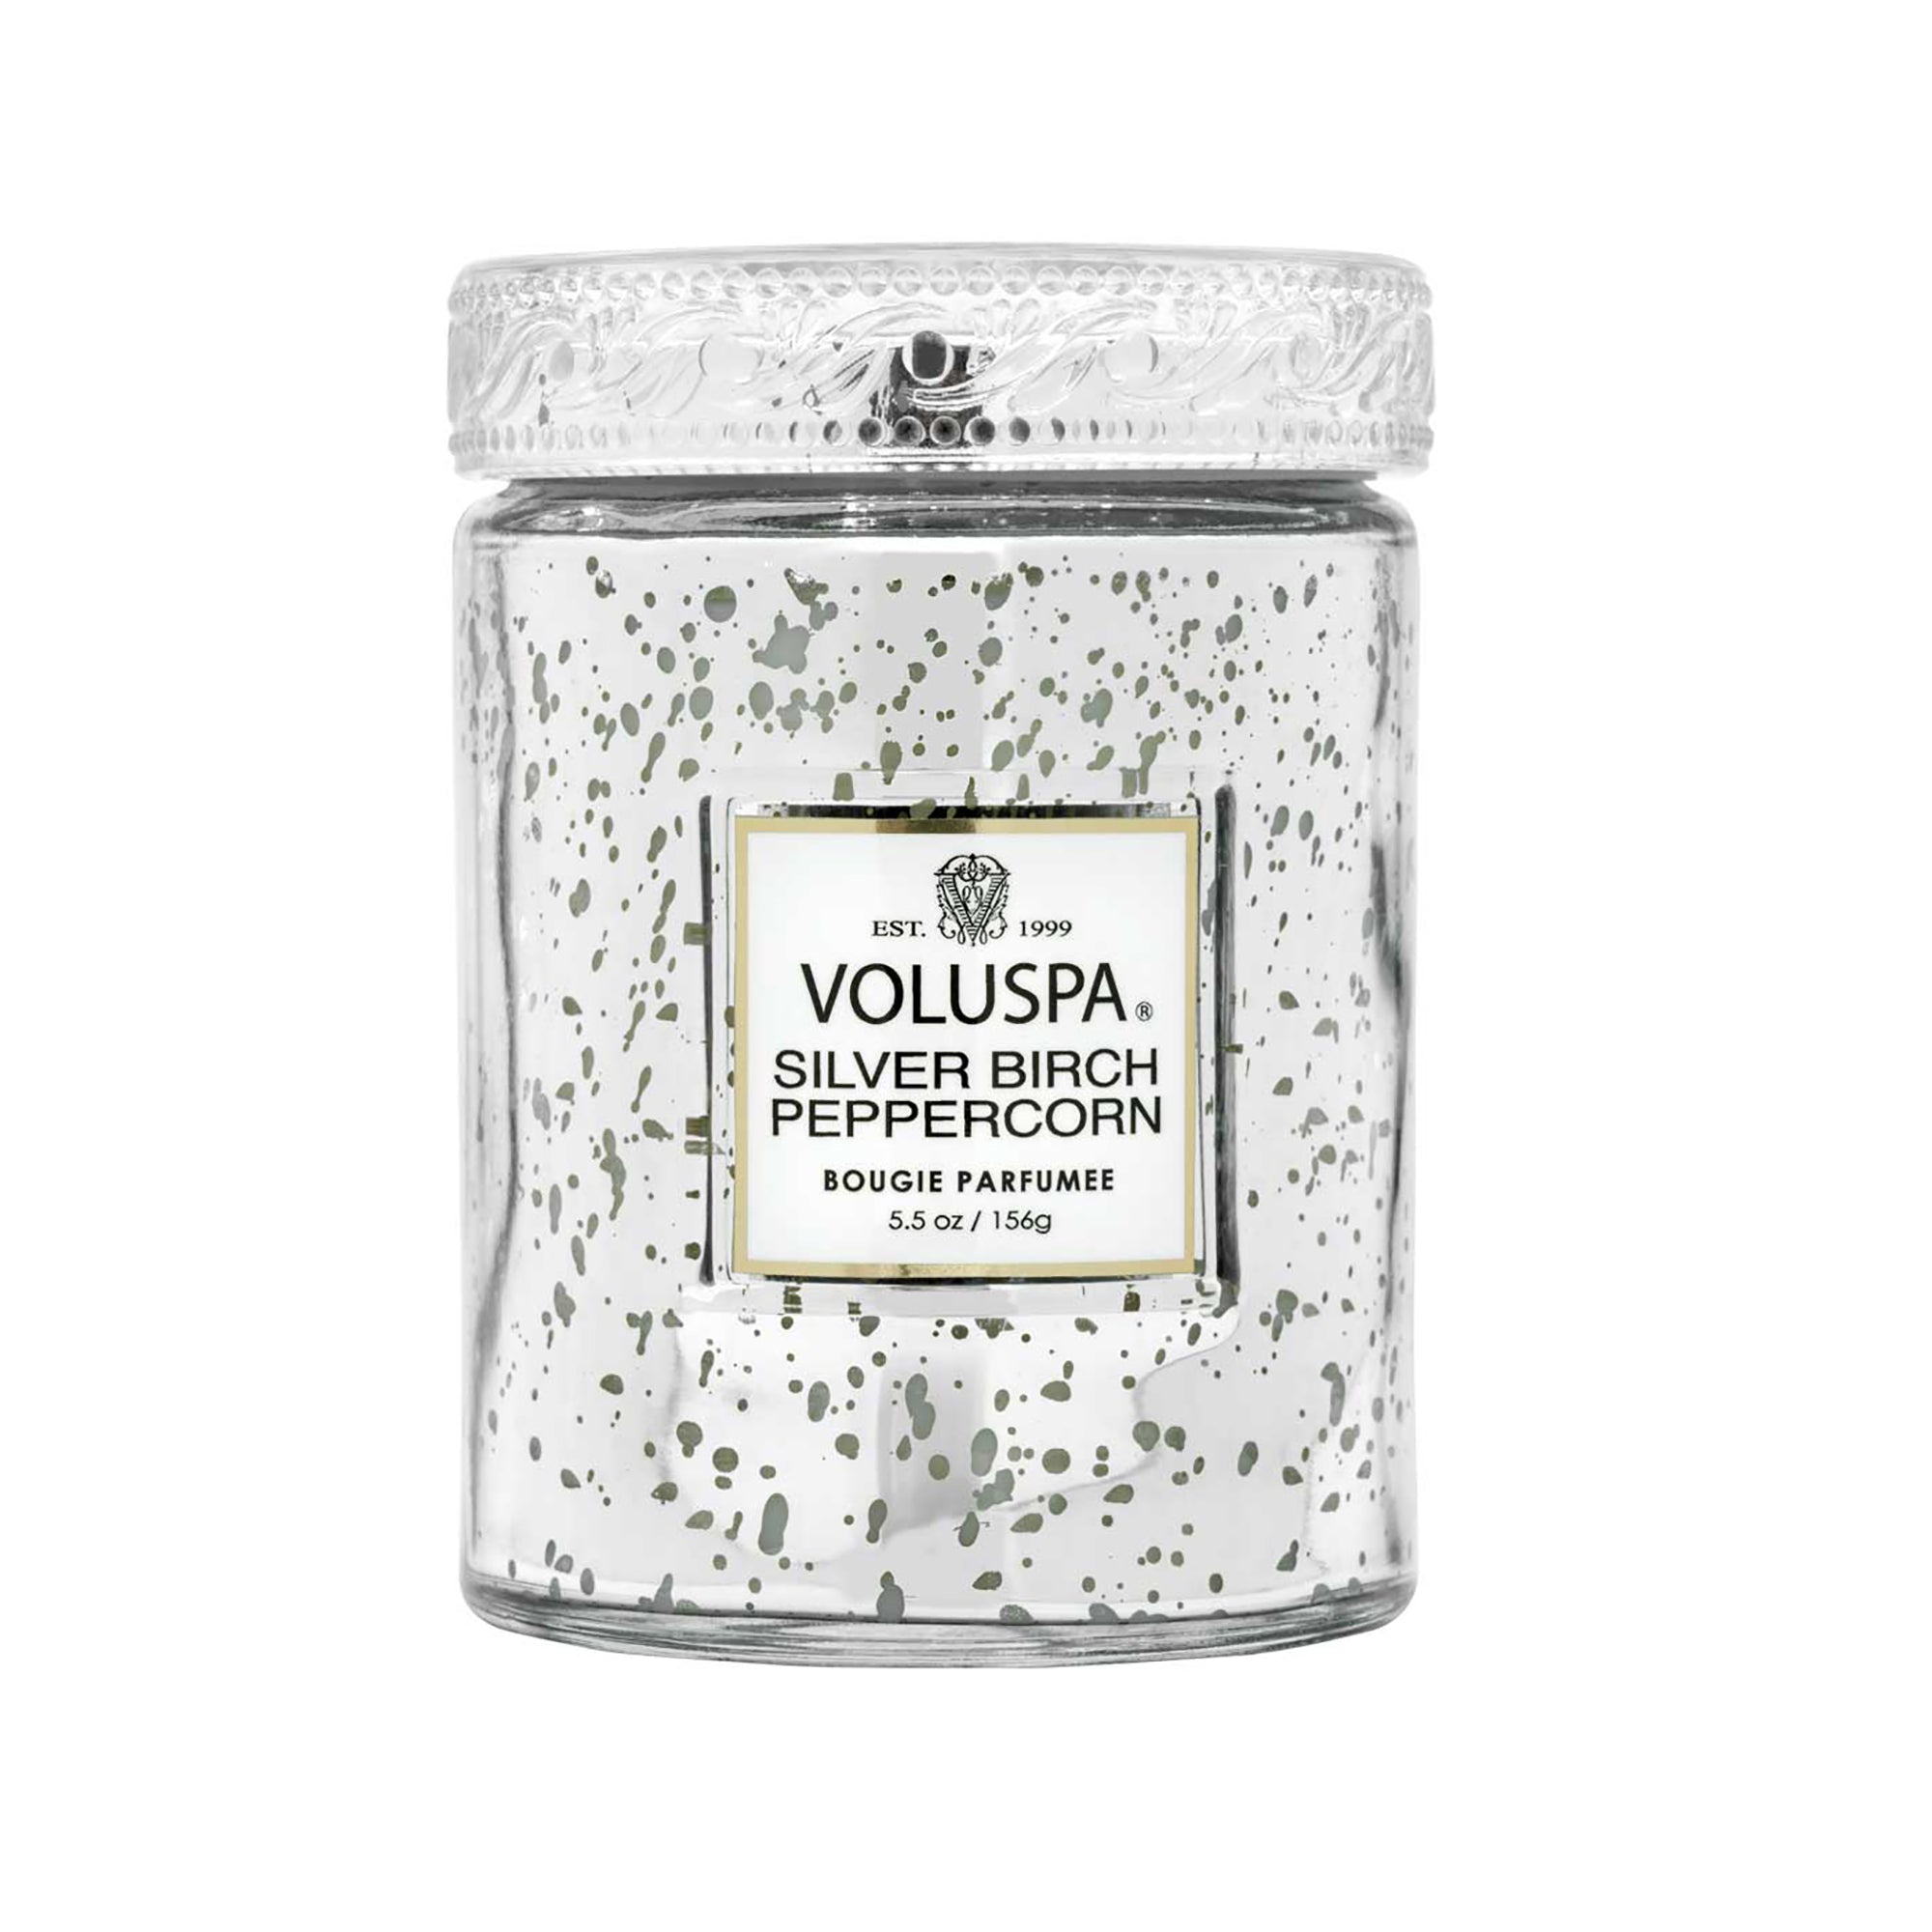 Voluspa Small Jar Candle / Silver Birch Peppercorn